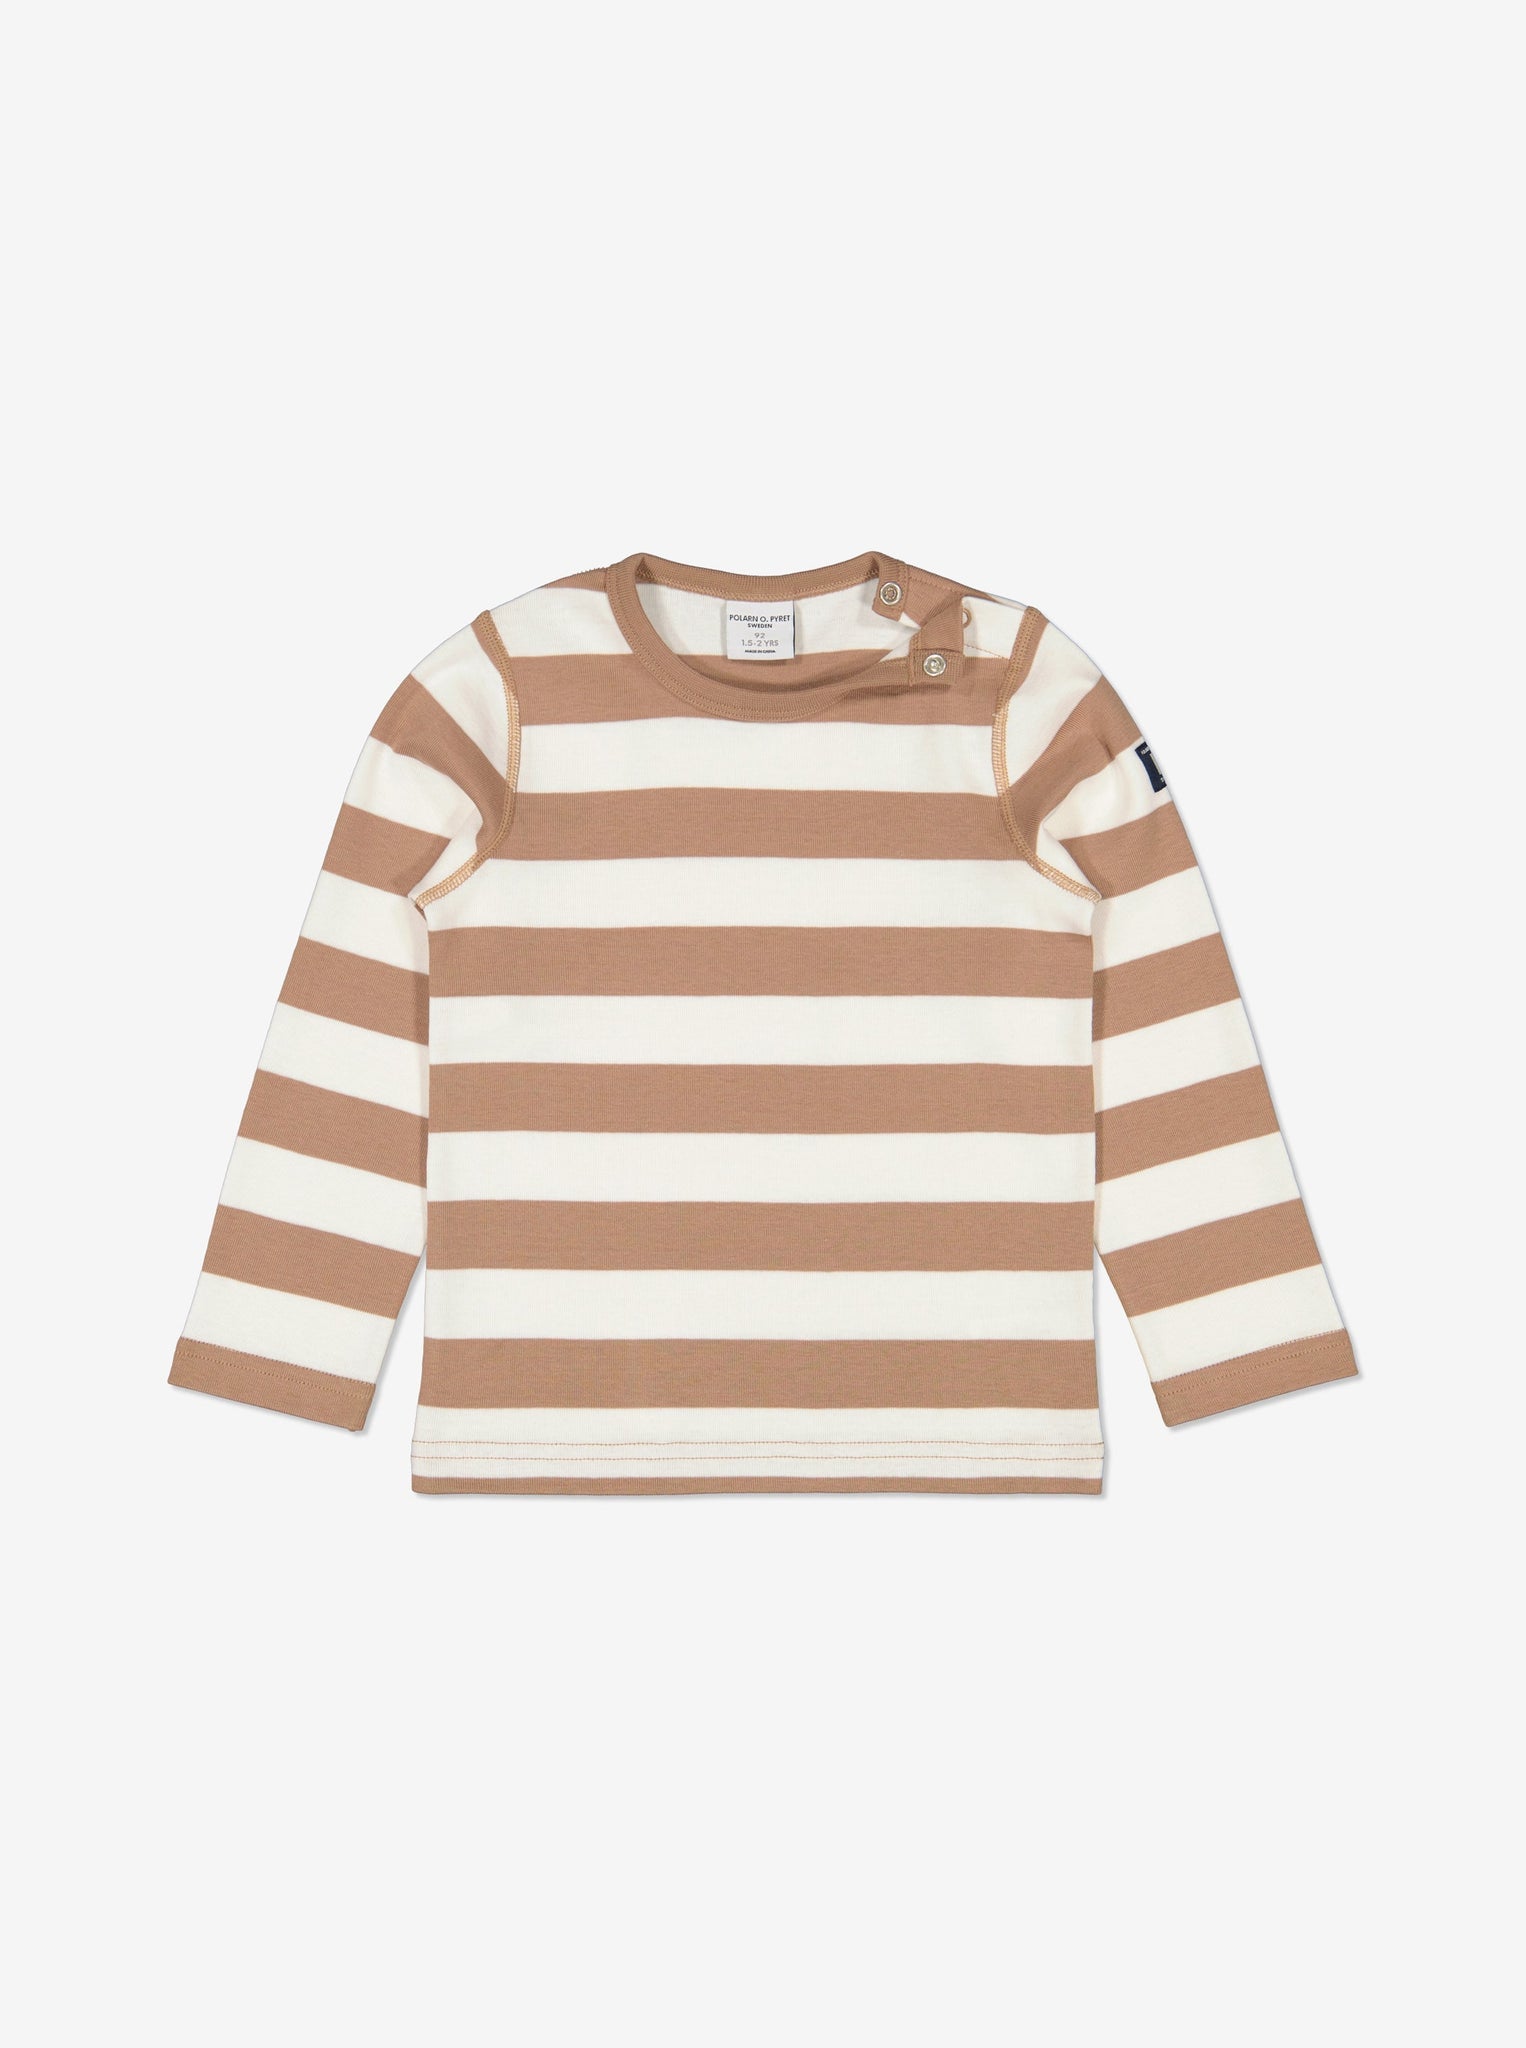  Organic Cotton Brown Striped Kids Top from Polarn O. Pyret Kidswear. Made Using GOTS Certified Organic Cotton